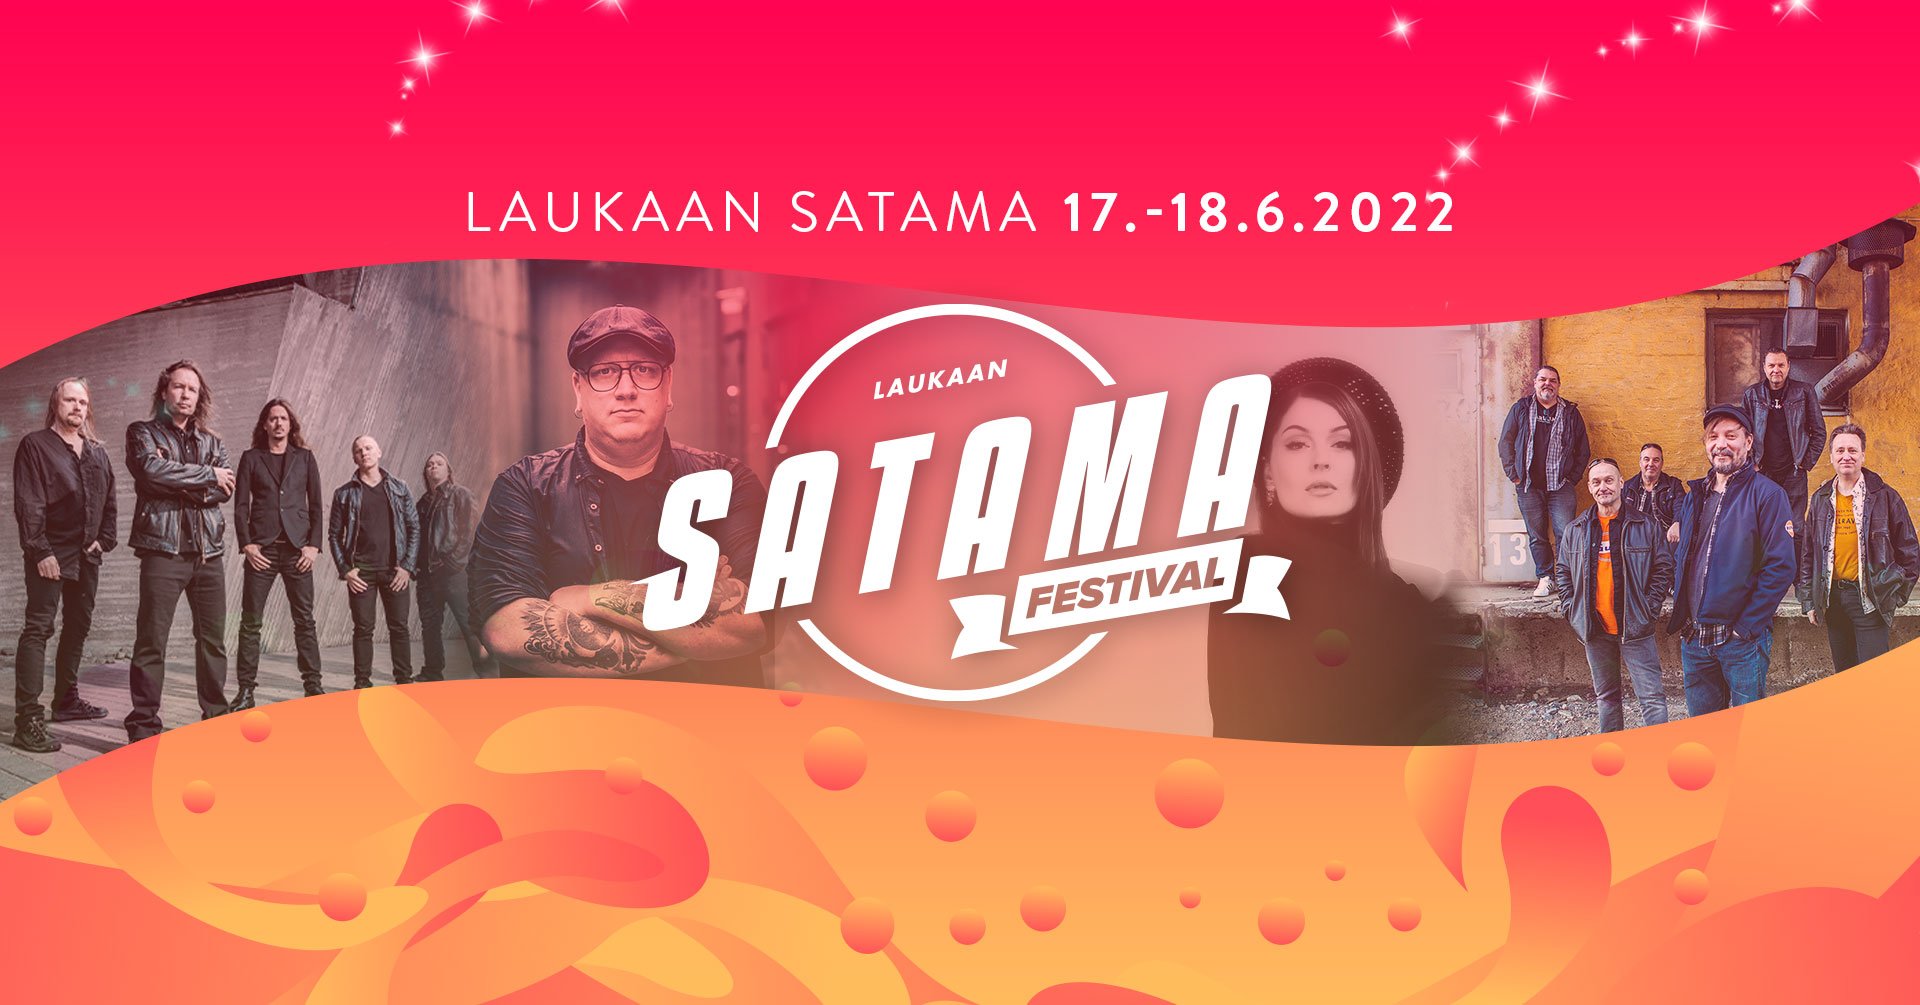 Laukaan Satama Festival 2022 - Visit Laukaa